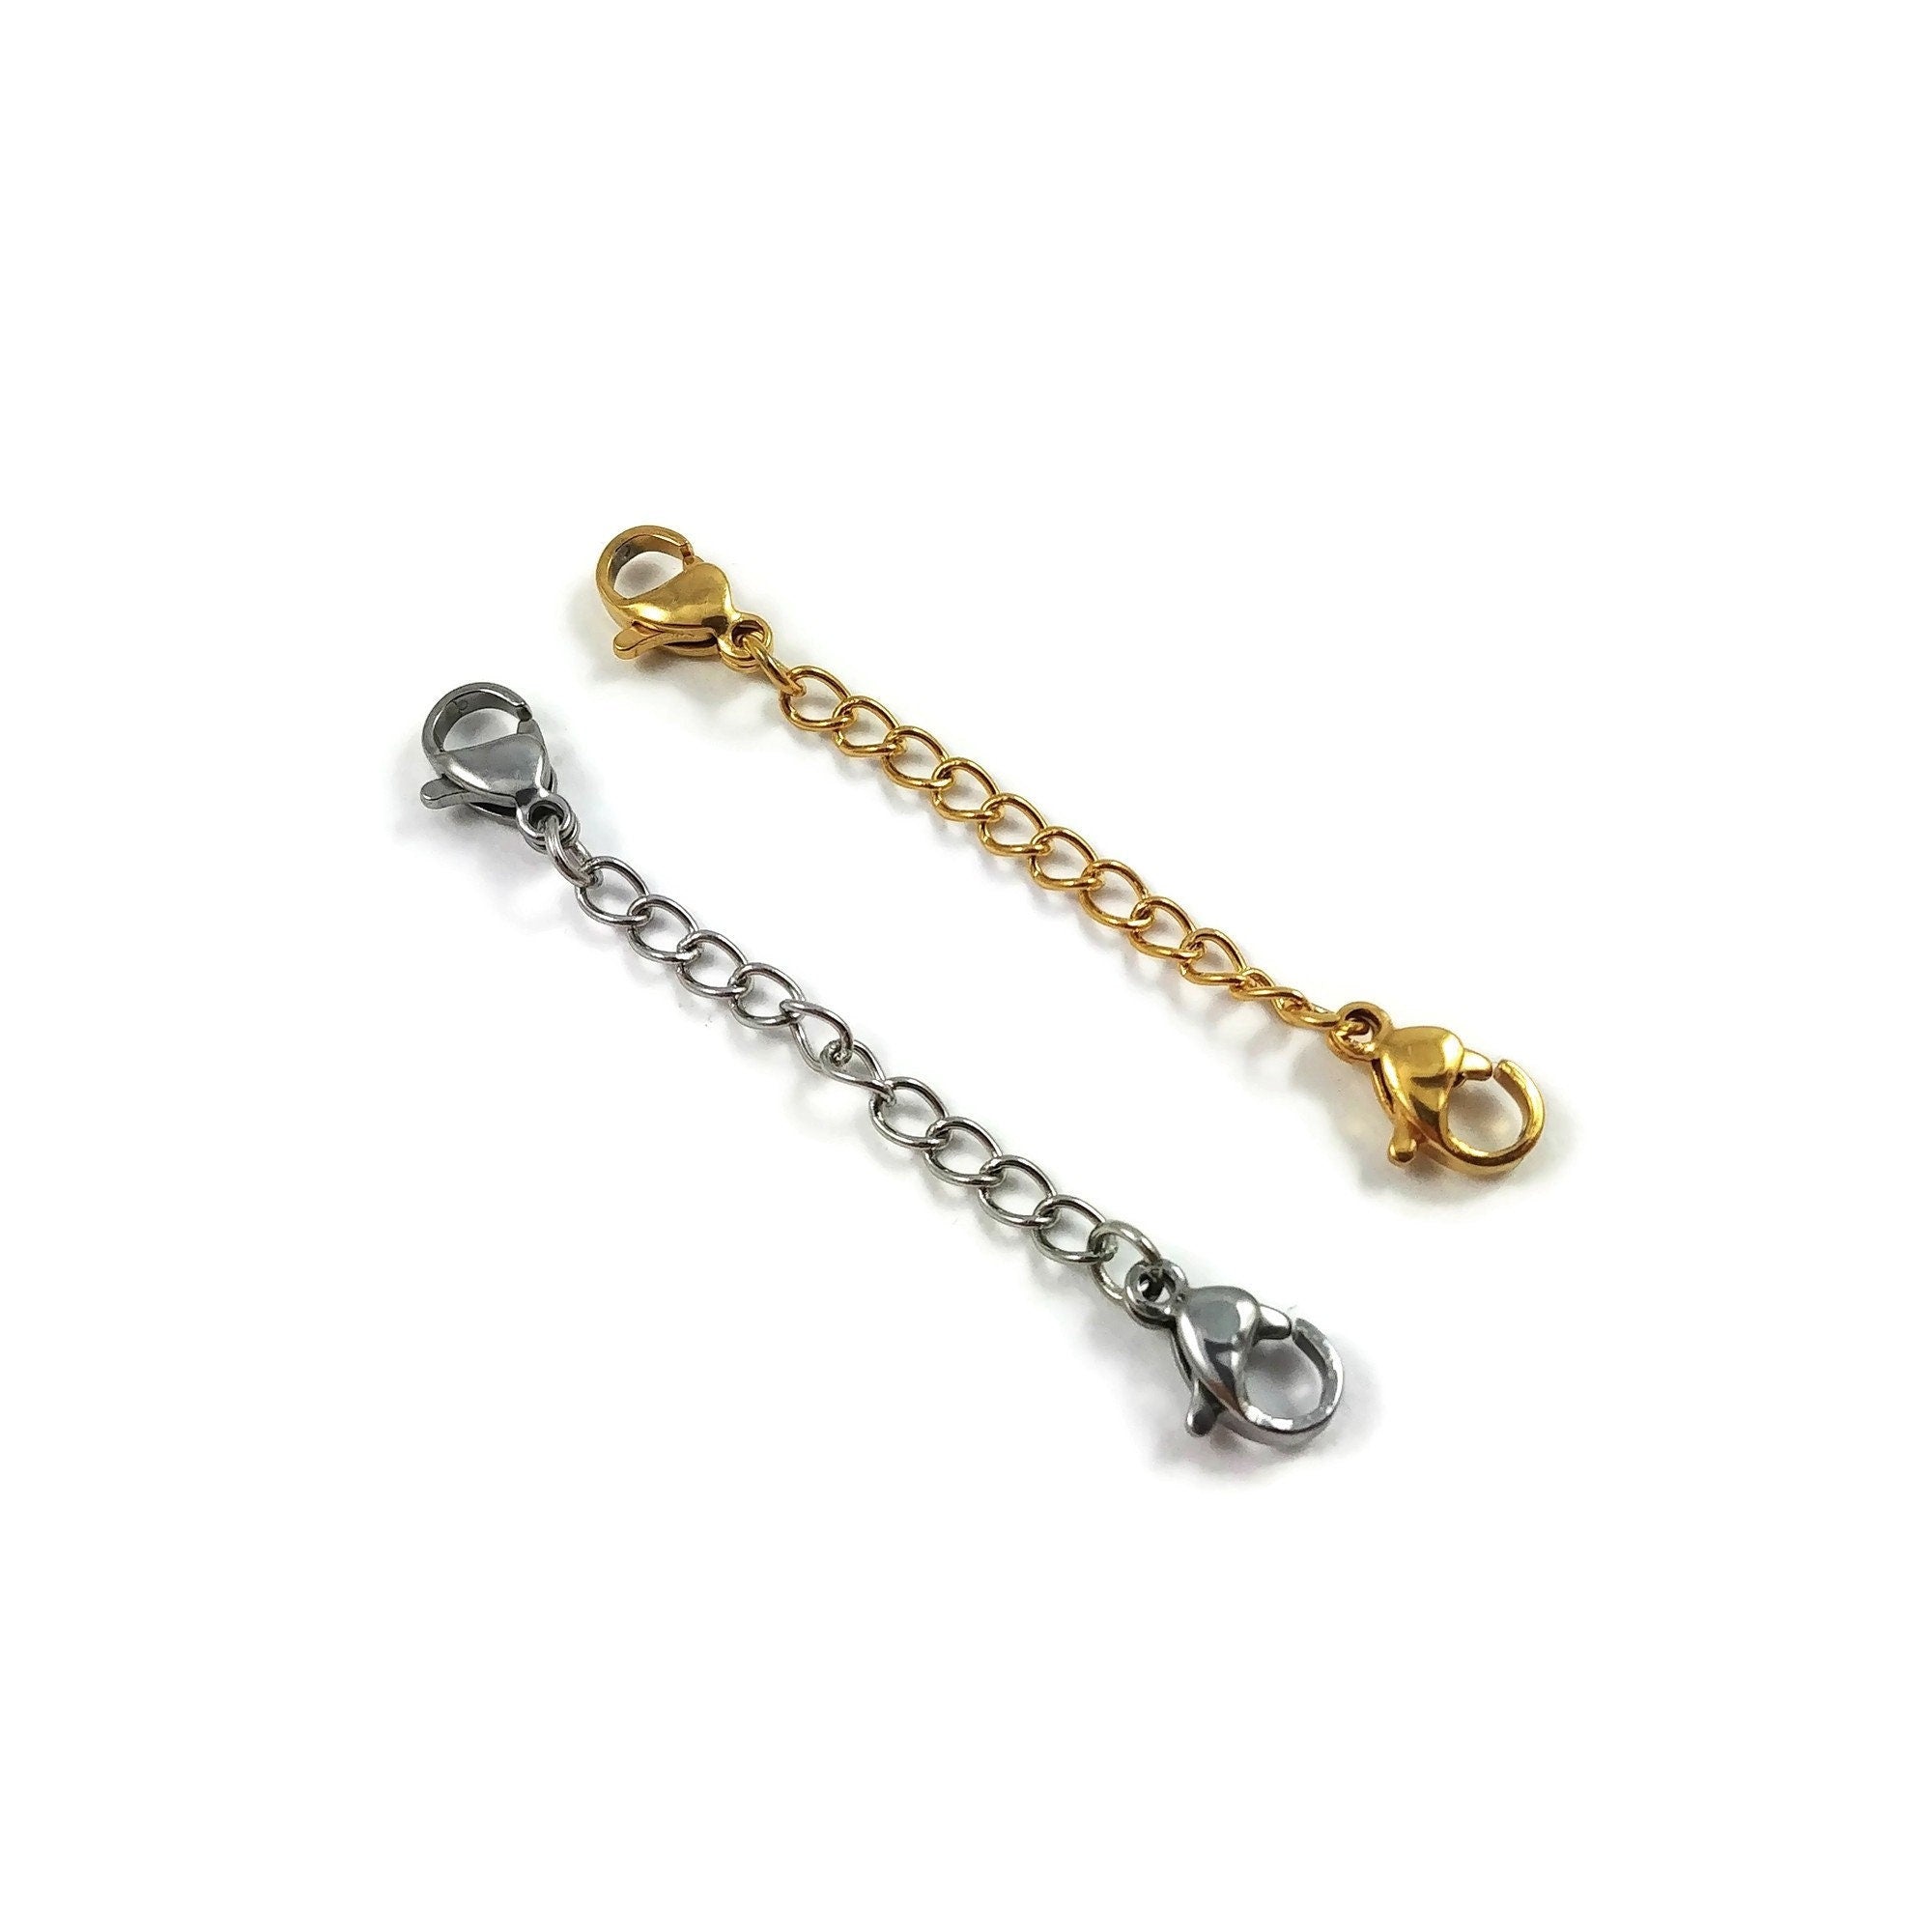 D-BUY 8 Pcs Stainless Steel Necklace Extender Bracelet Extender Extender Chain Set 4 Different Length 6 4 3 2 4 Gold 4 Silver